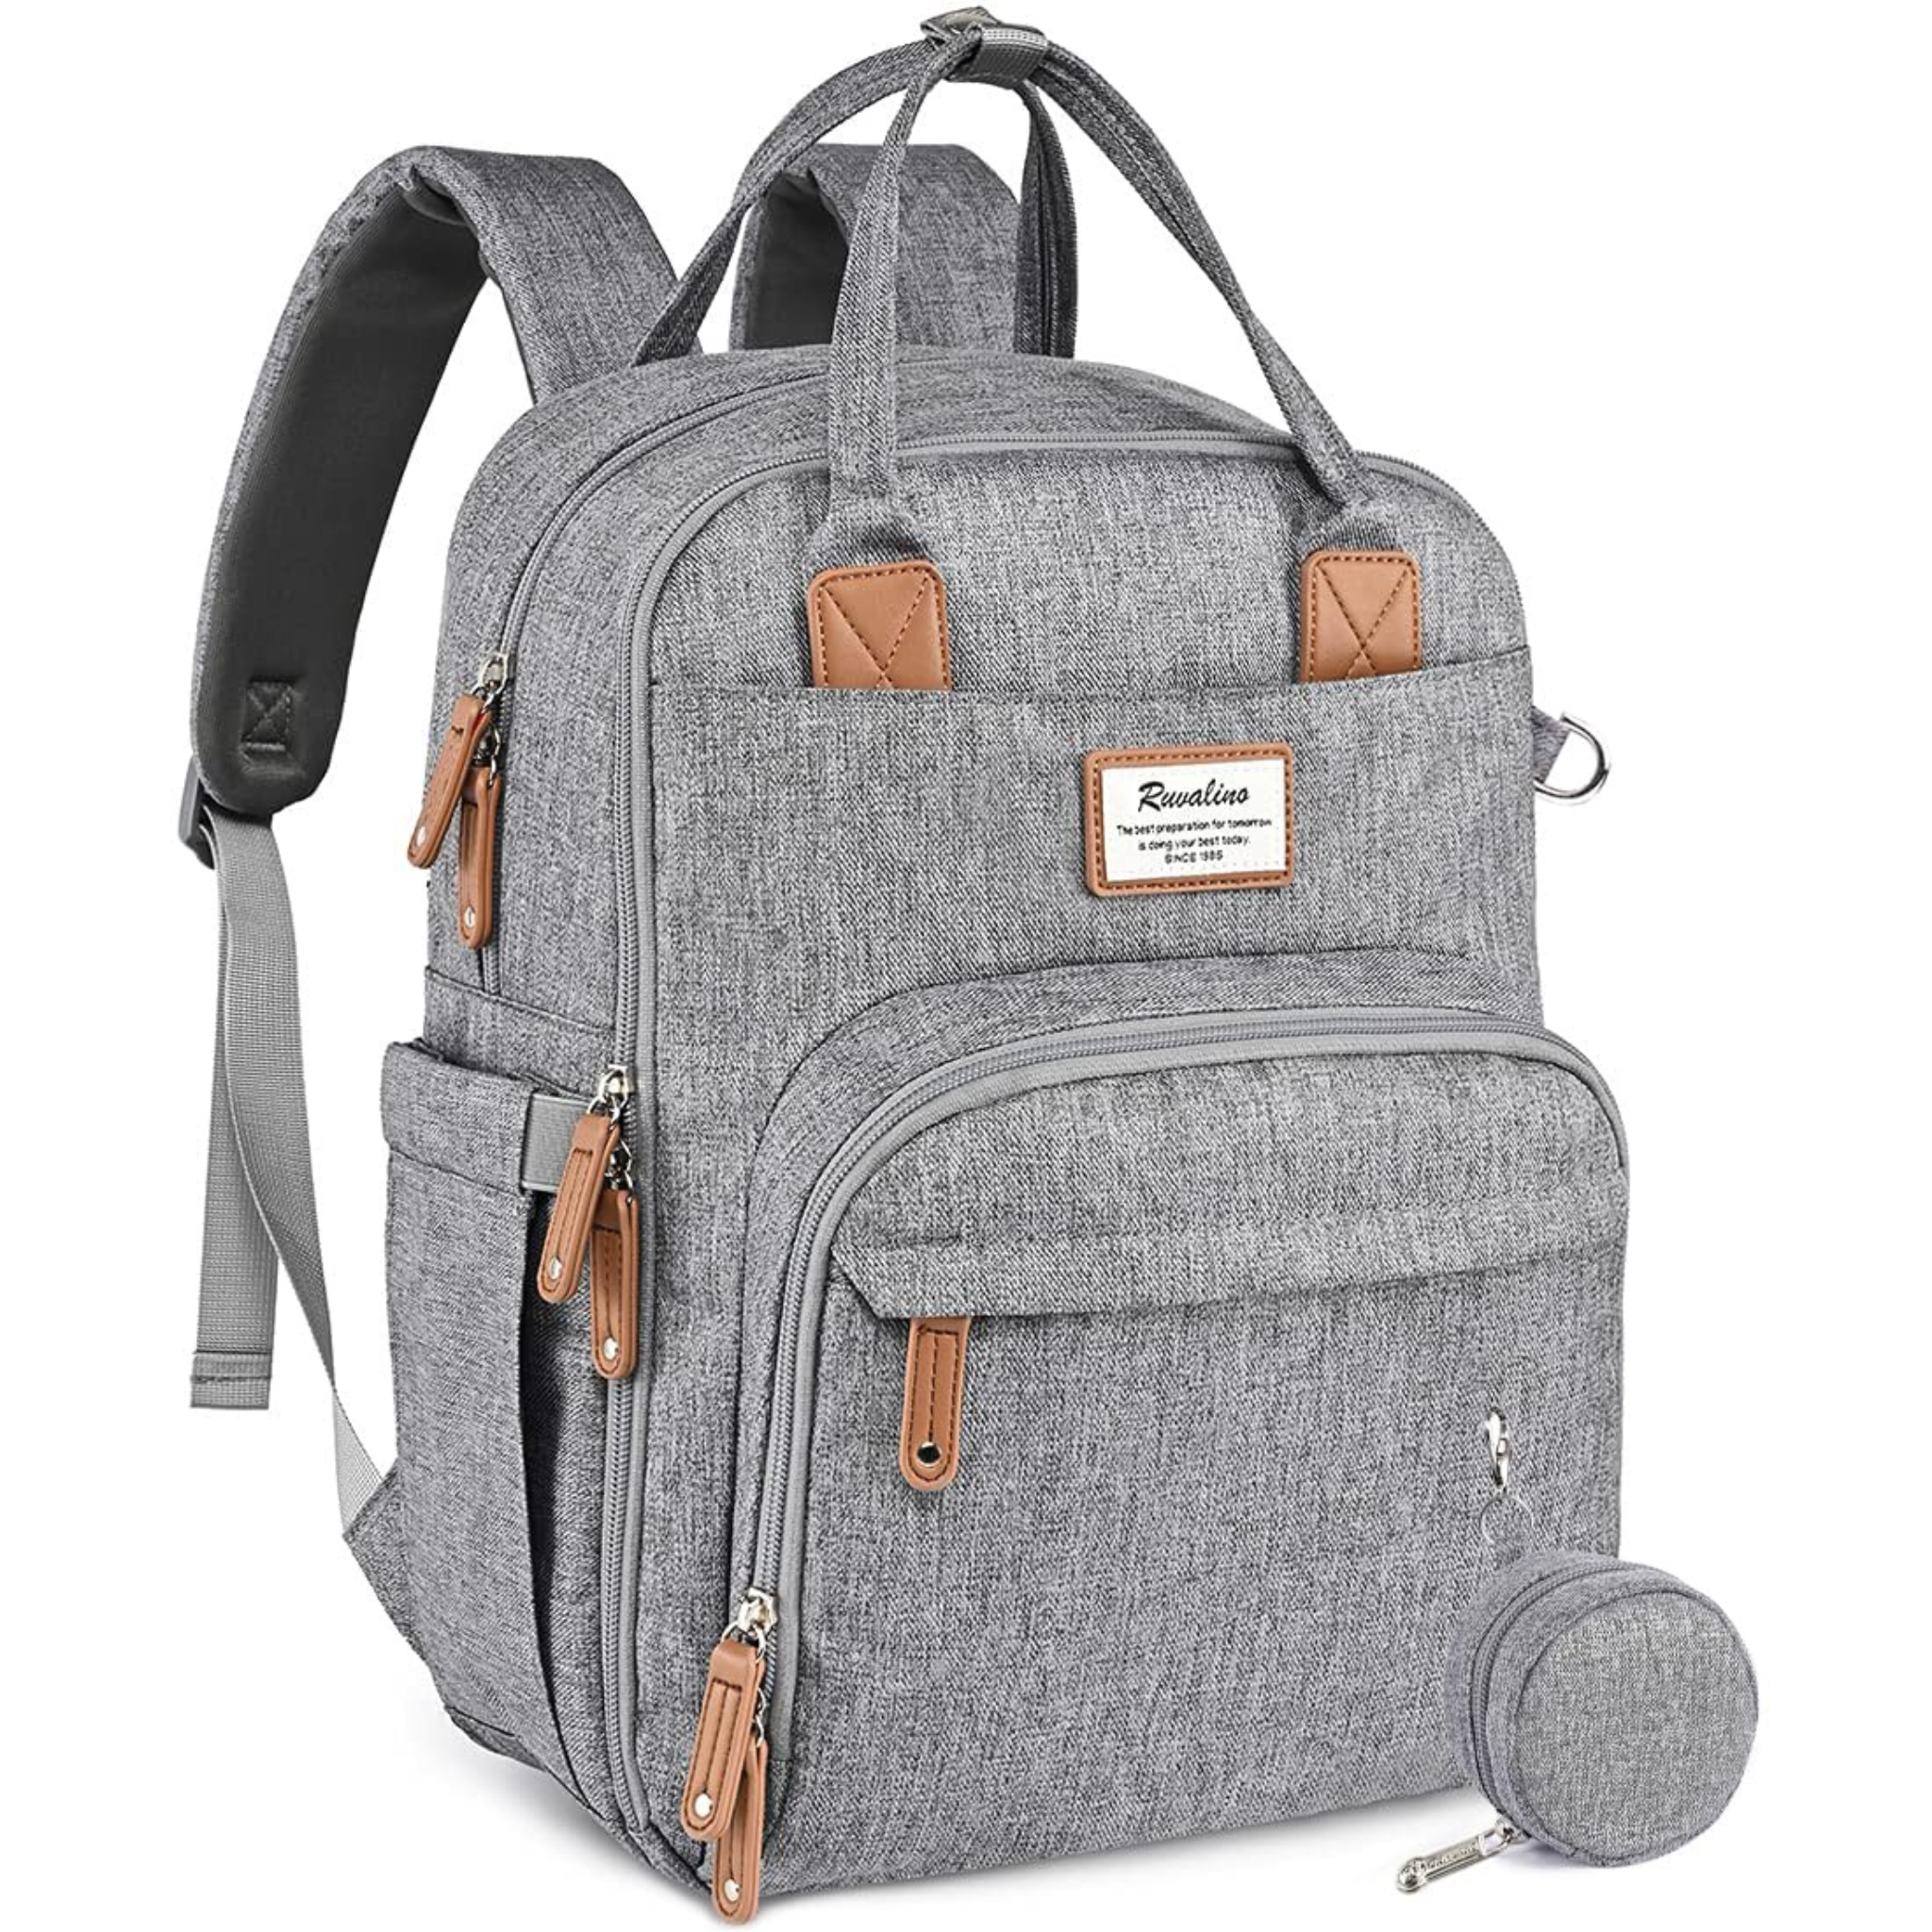 Multifunction Travel Diaper Bag Backpack